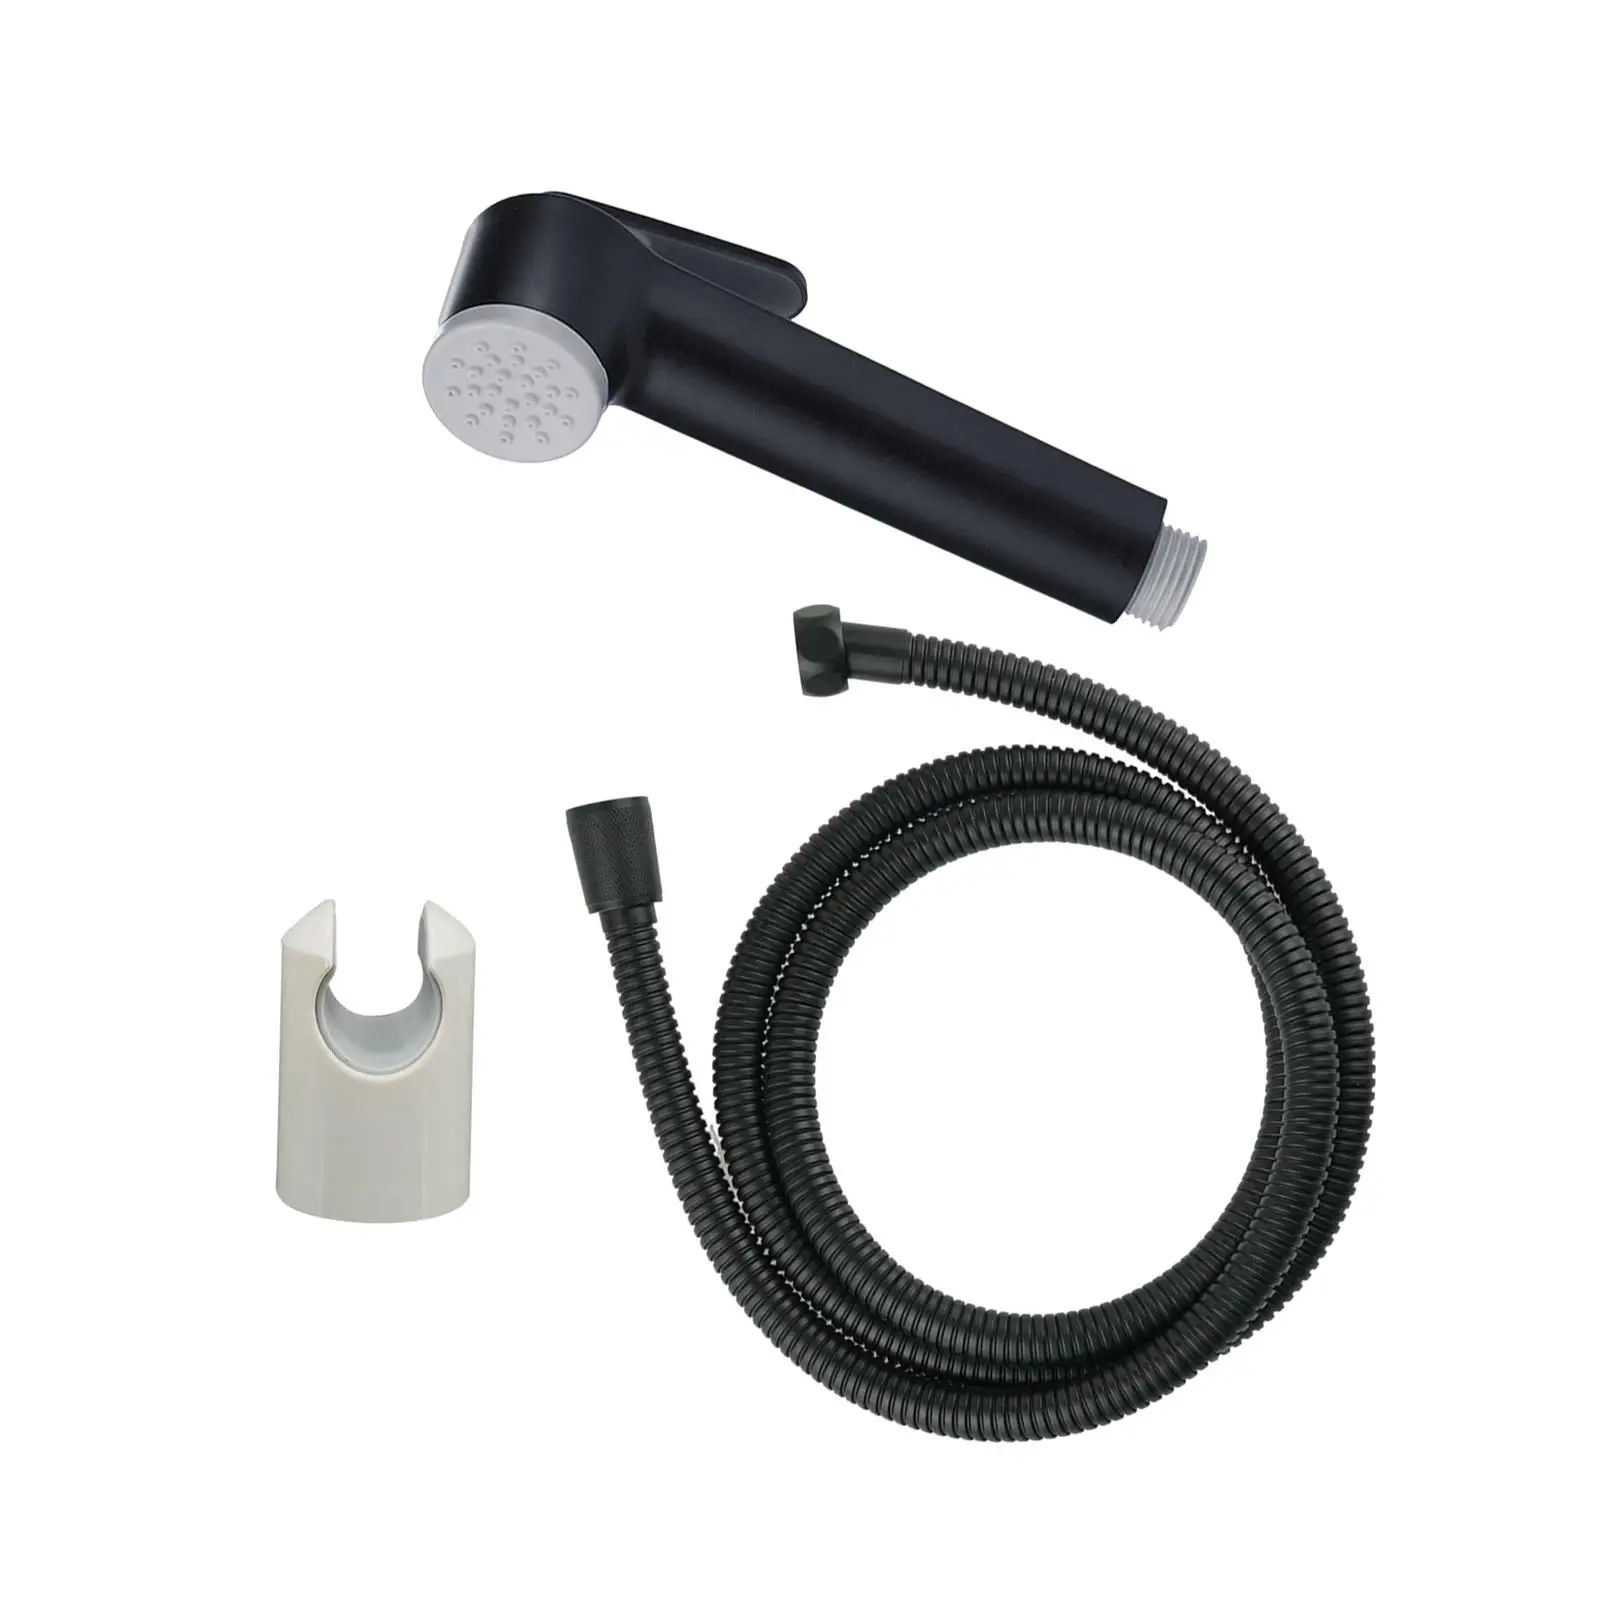 Water Pressure Control with Bidet Hose Portable Universal Bidet Sprayer Set for Garden Floor fruits Washing Car